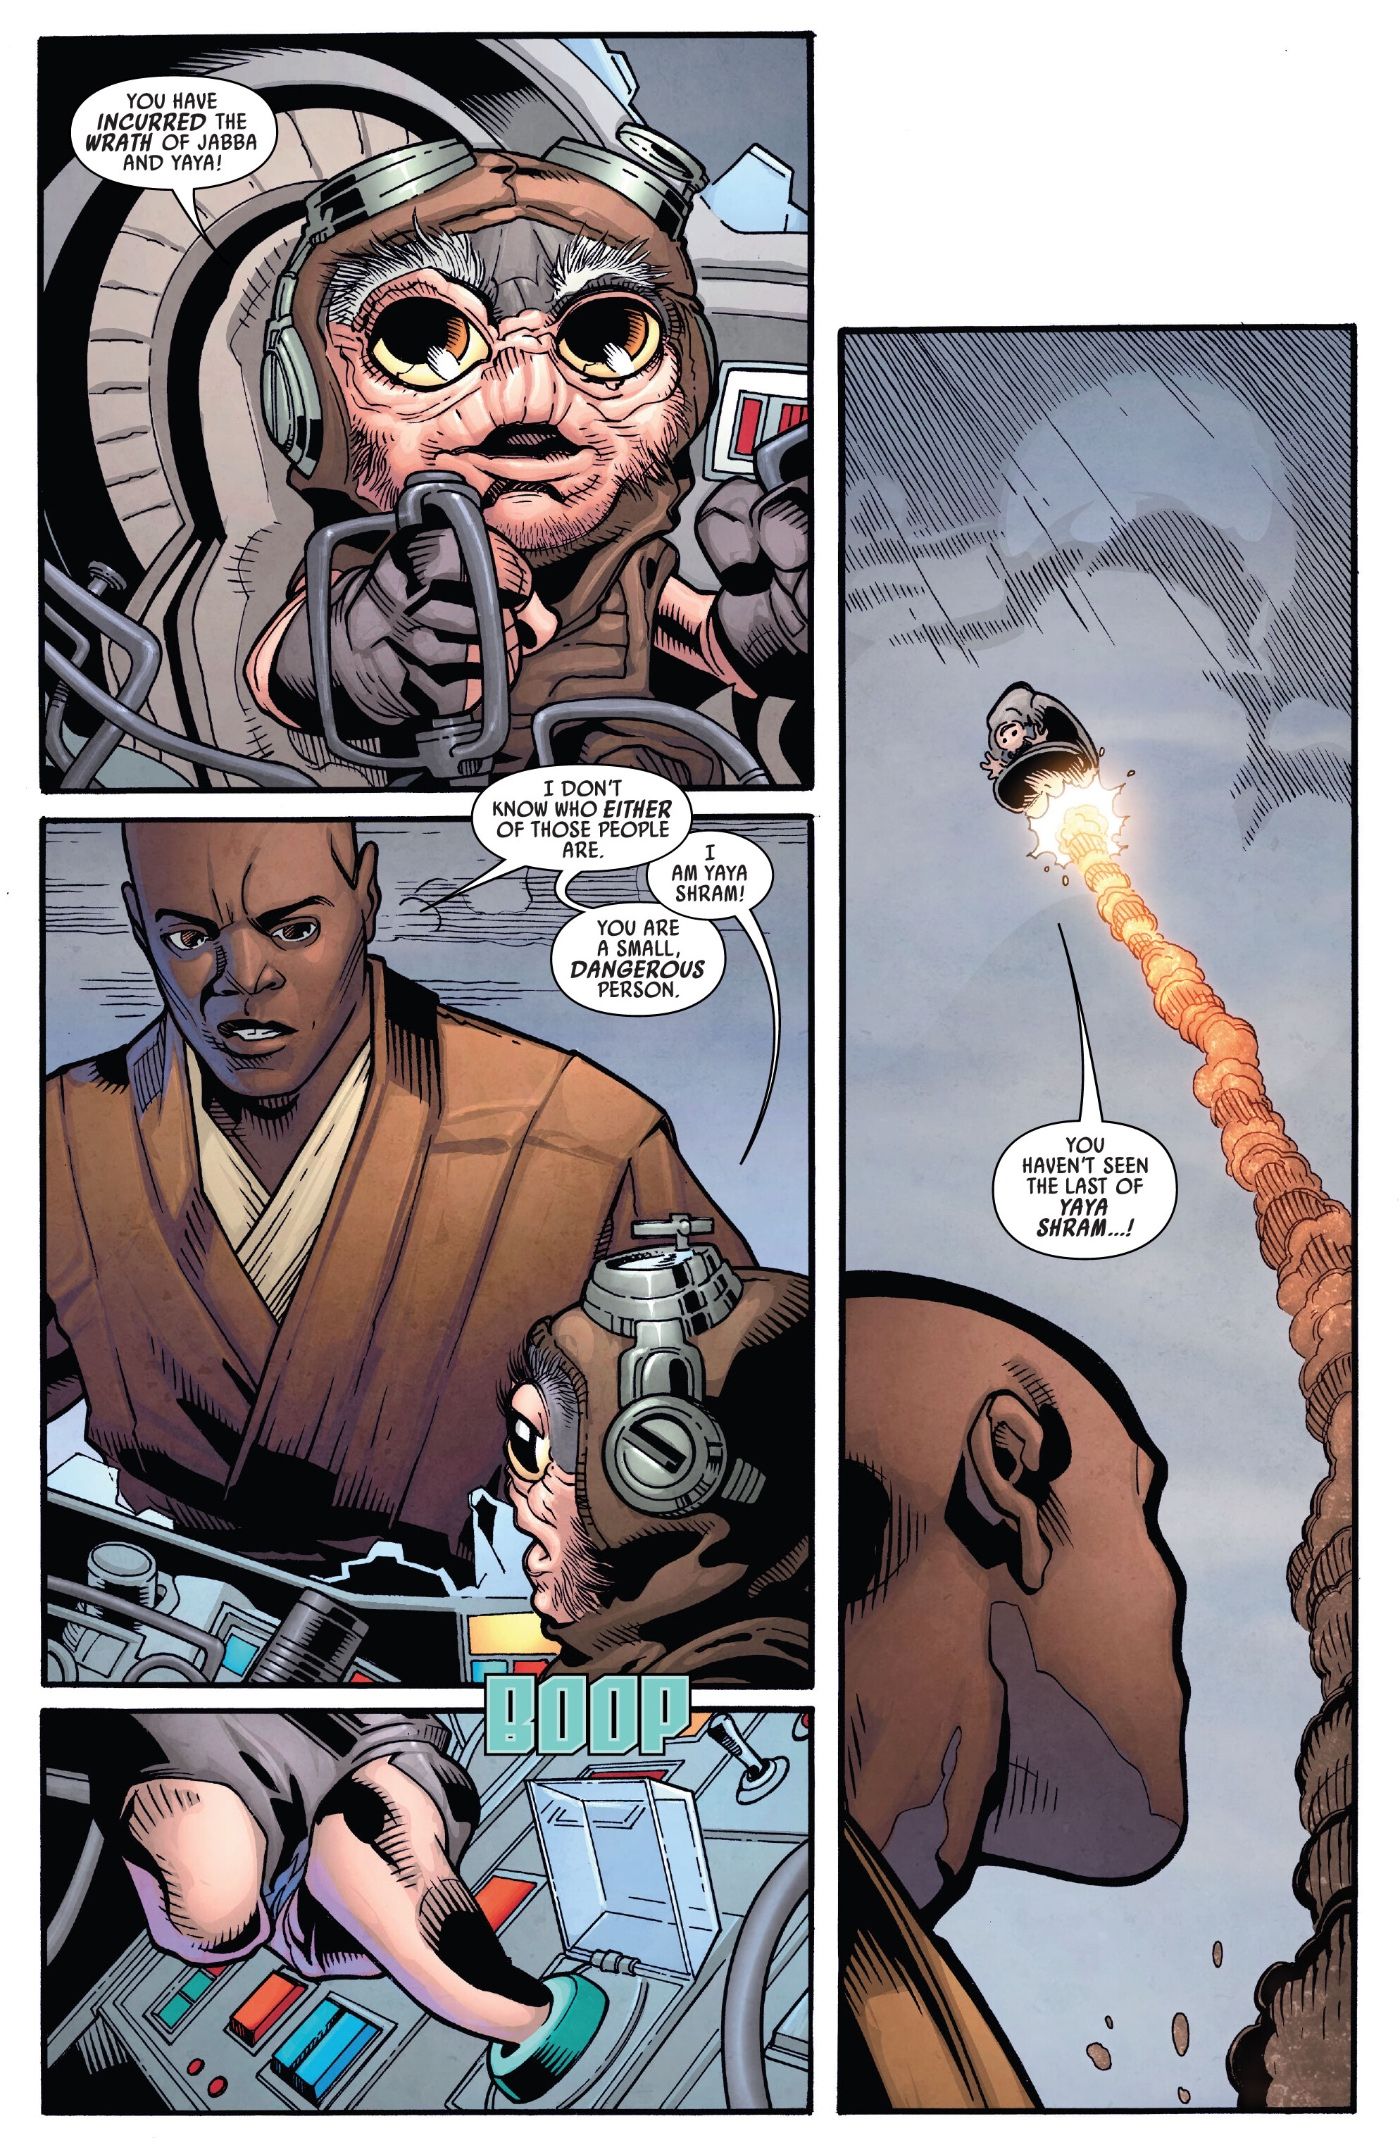 Mace Windu’s War Against Jabba the Hutt Showcases His True Power